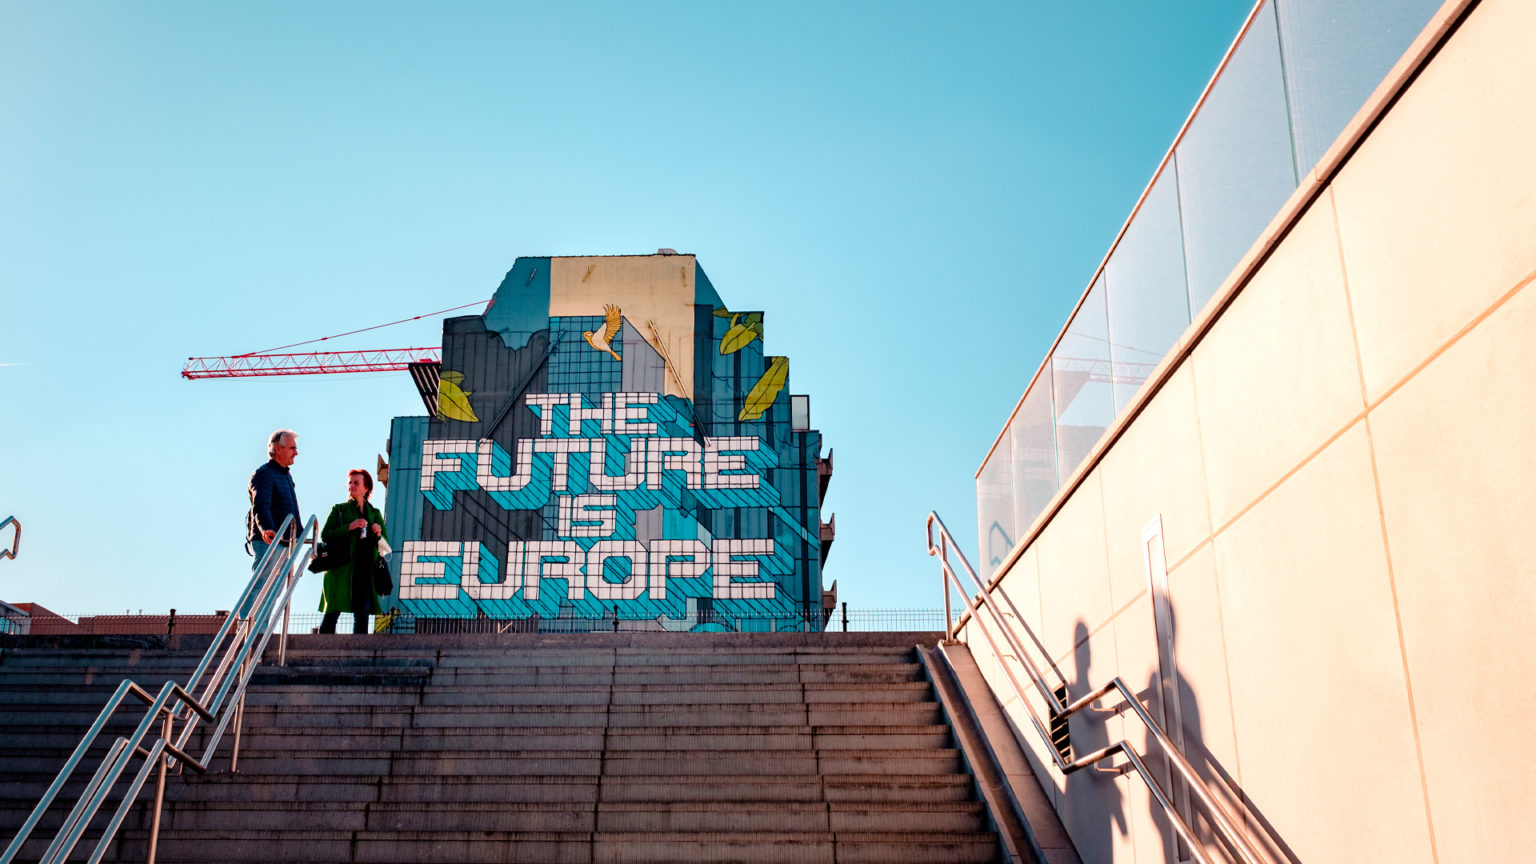 Siblega bouche de métro escalierpersonne street art future is europe